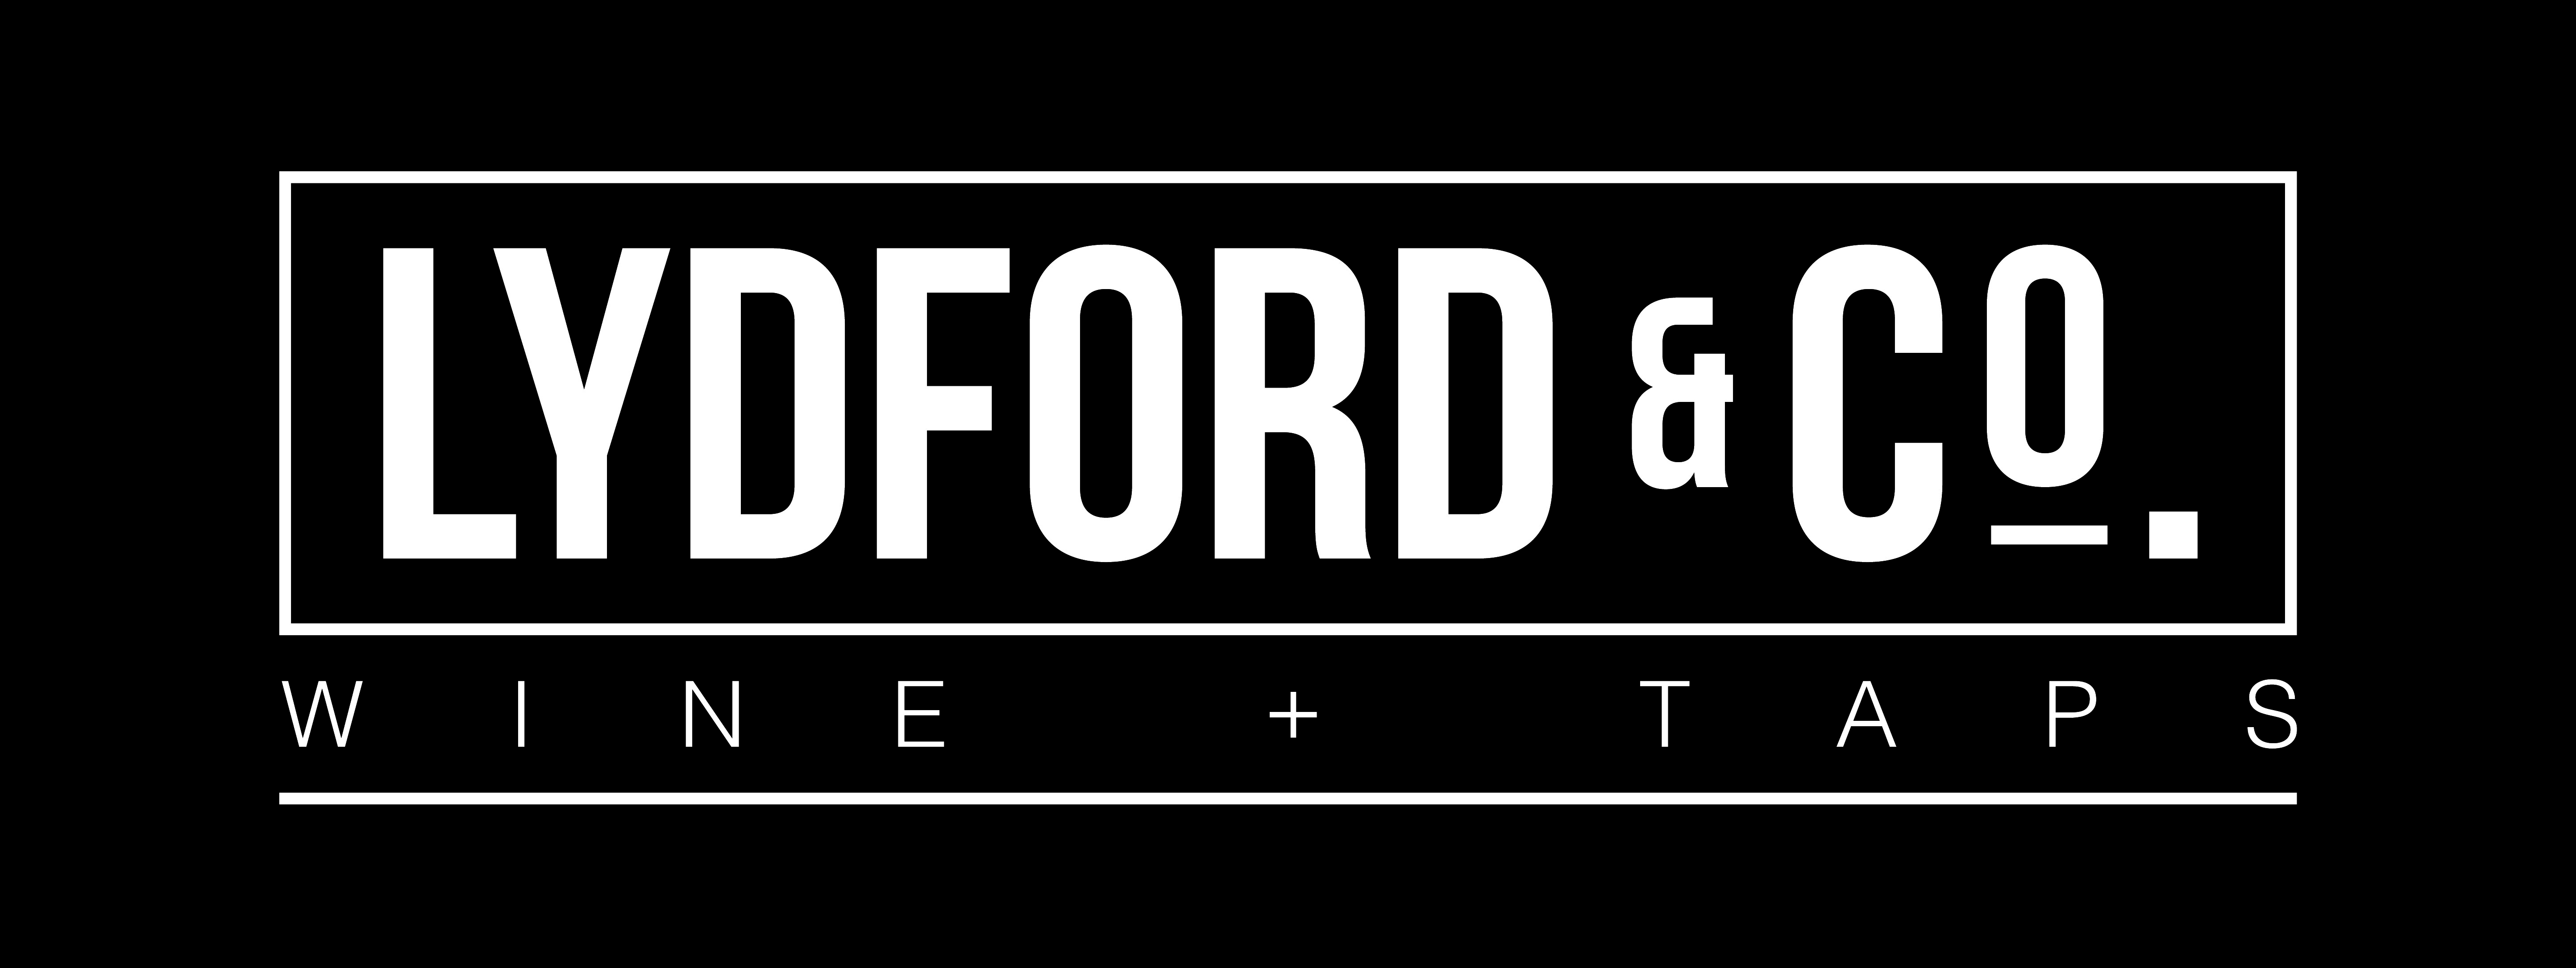 Lydford & Co